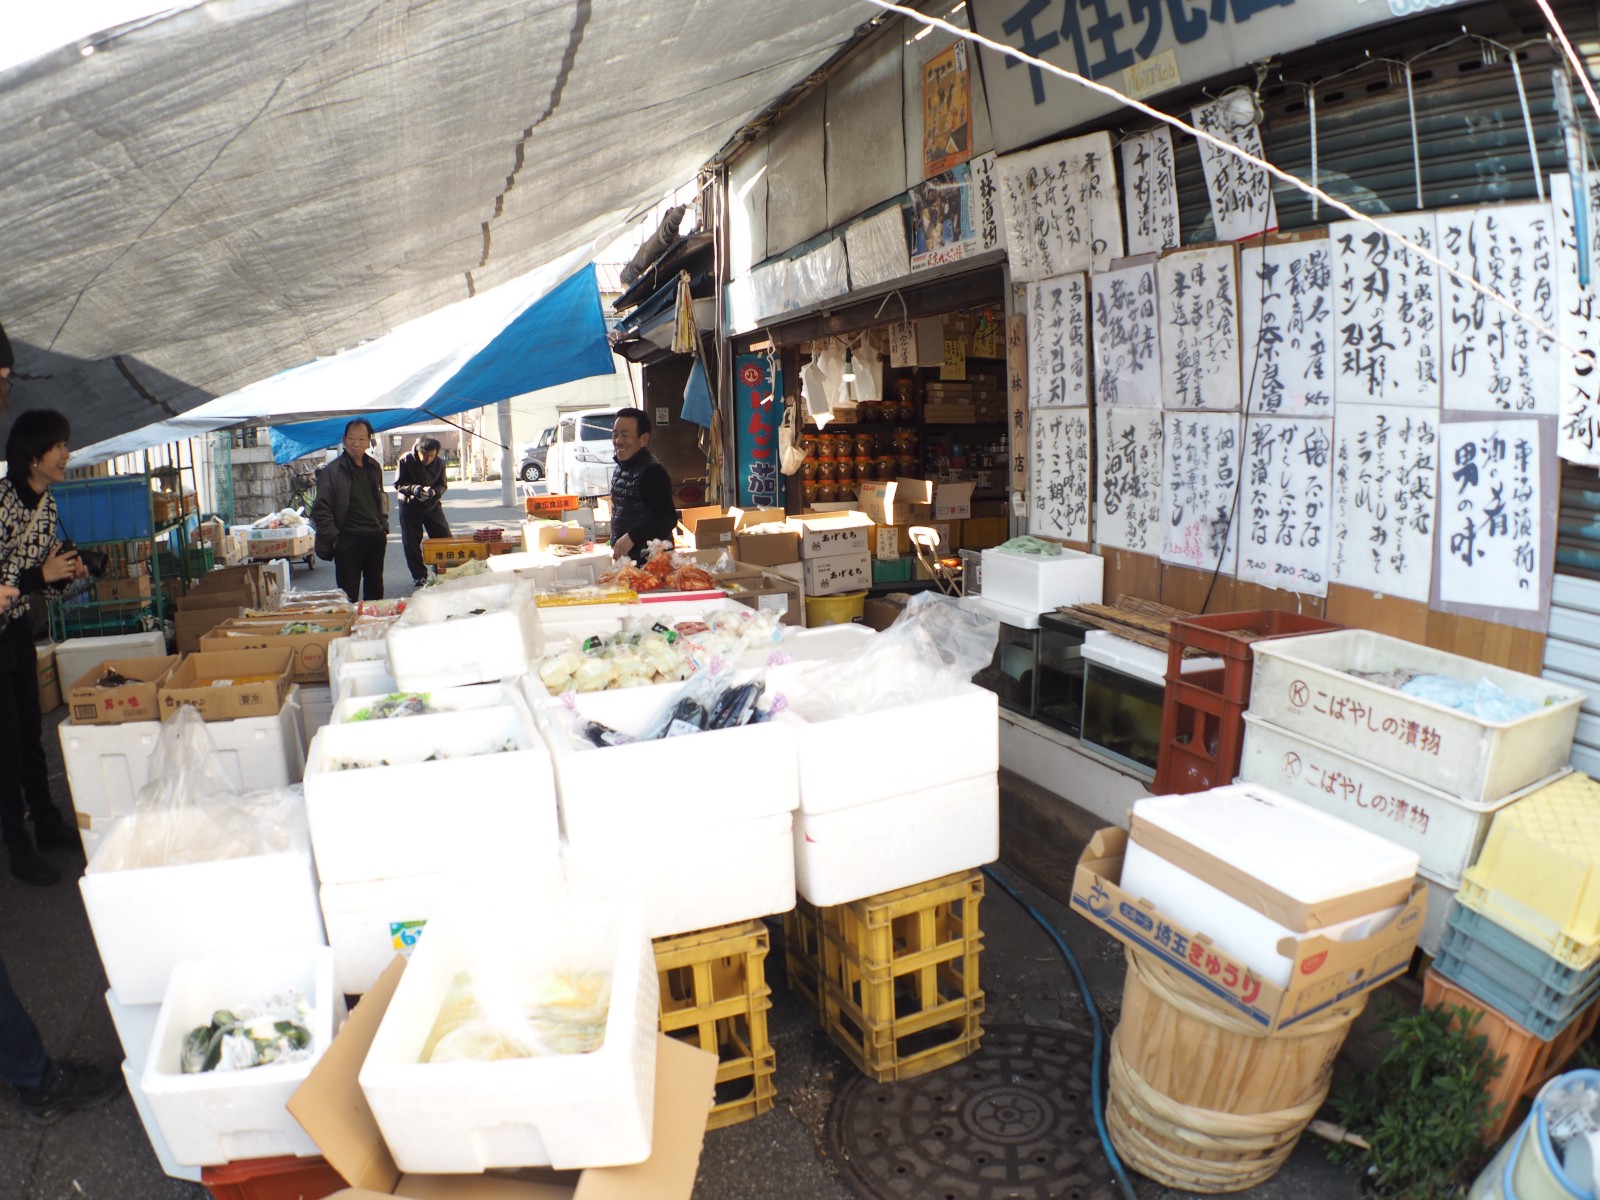 Adachi Fish Market: Tokyo’s Hidden Fish Market - Japan Web Magazine